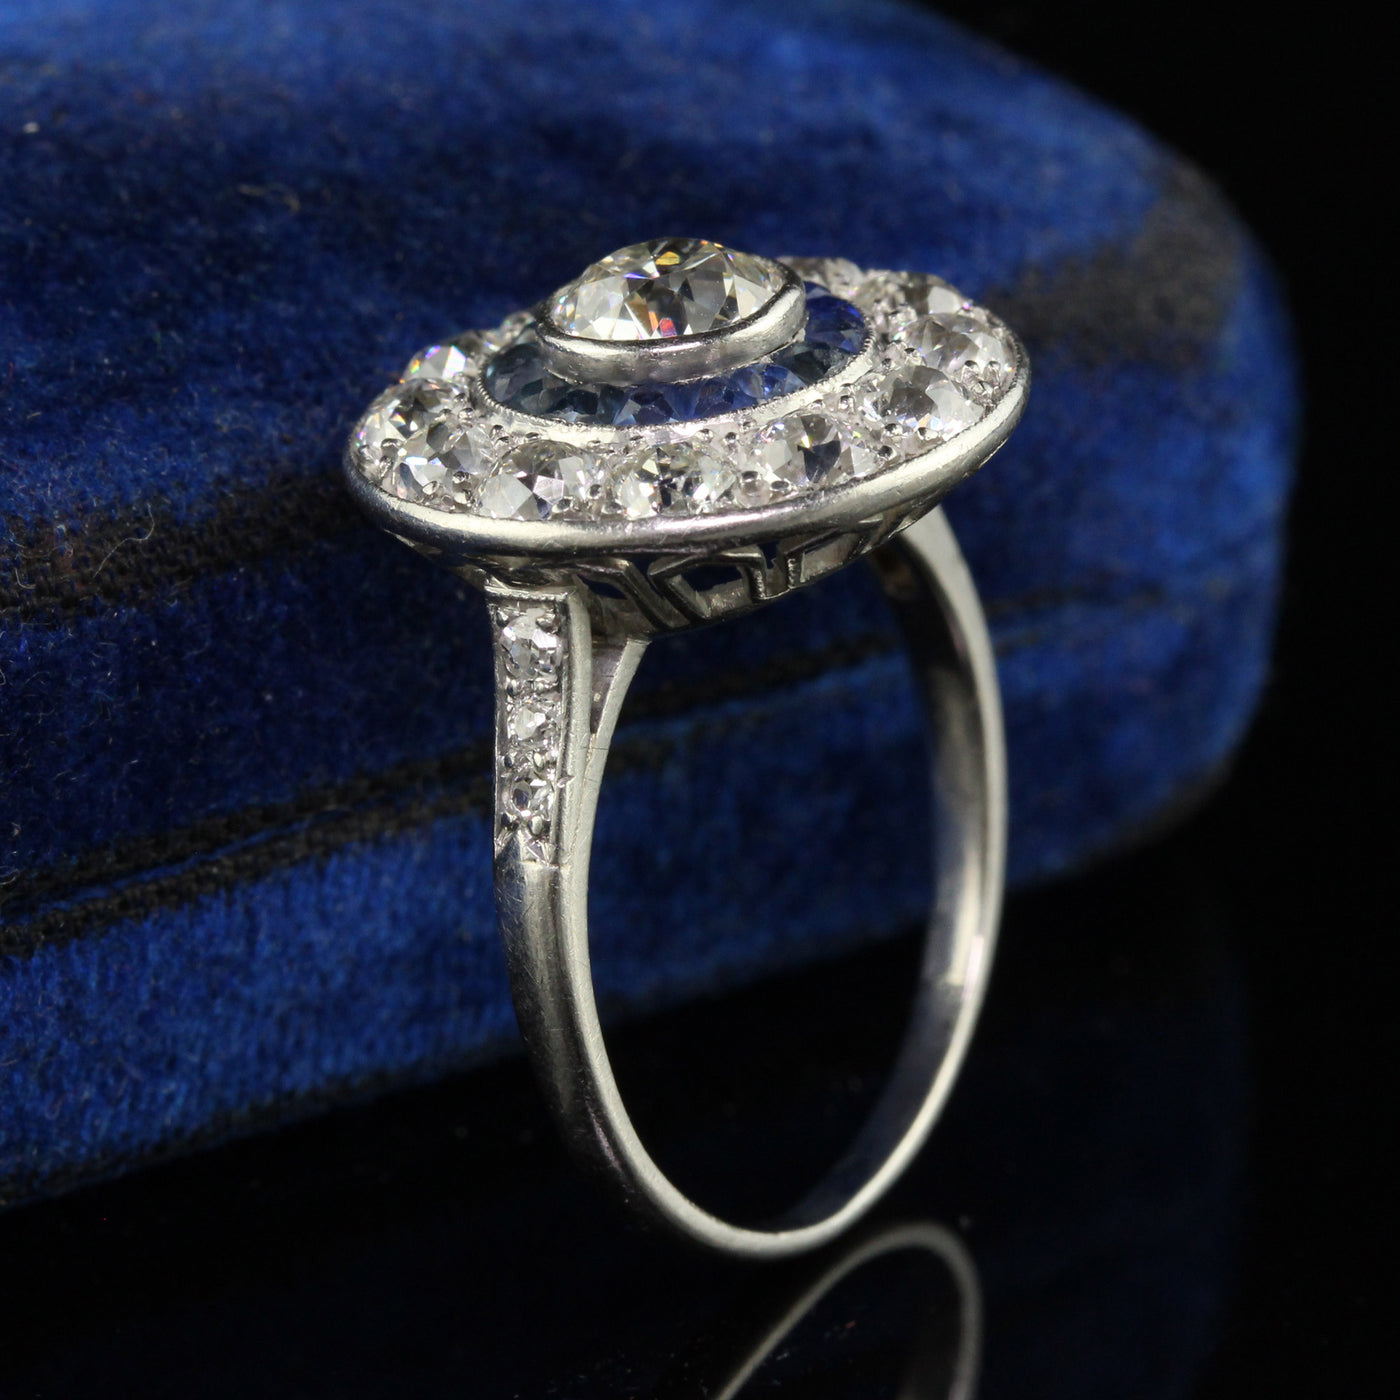 Antique Art Deco Platinum Old European Diamond and Sapphire Target Engagement Ring